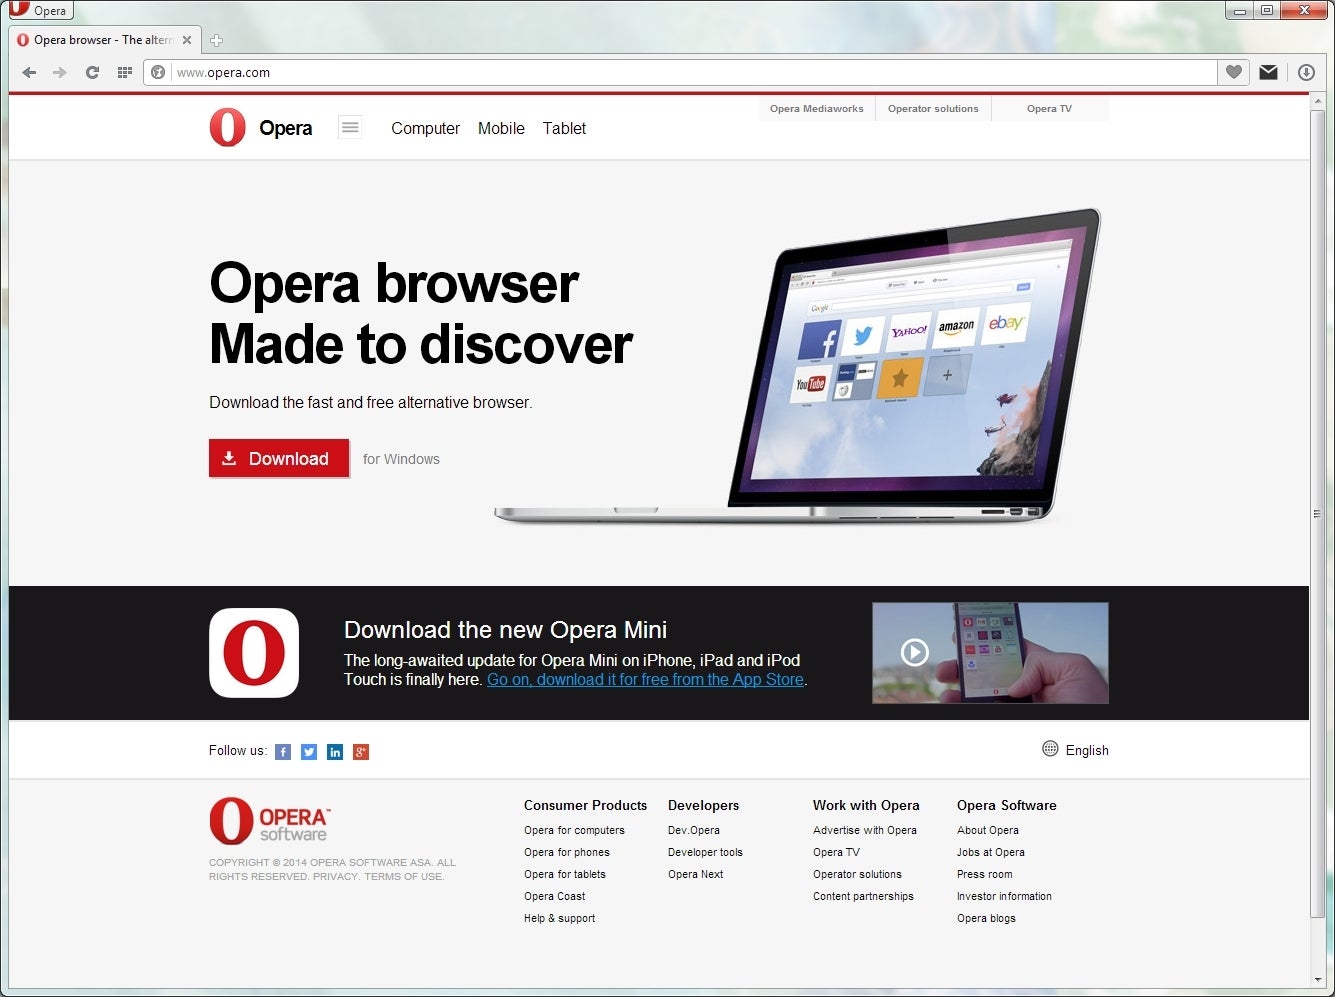 who develops opera browser